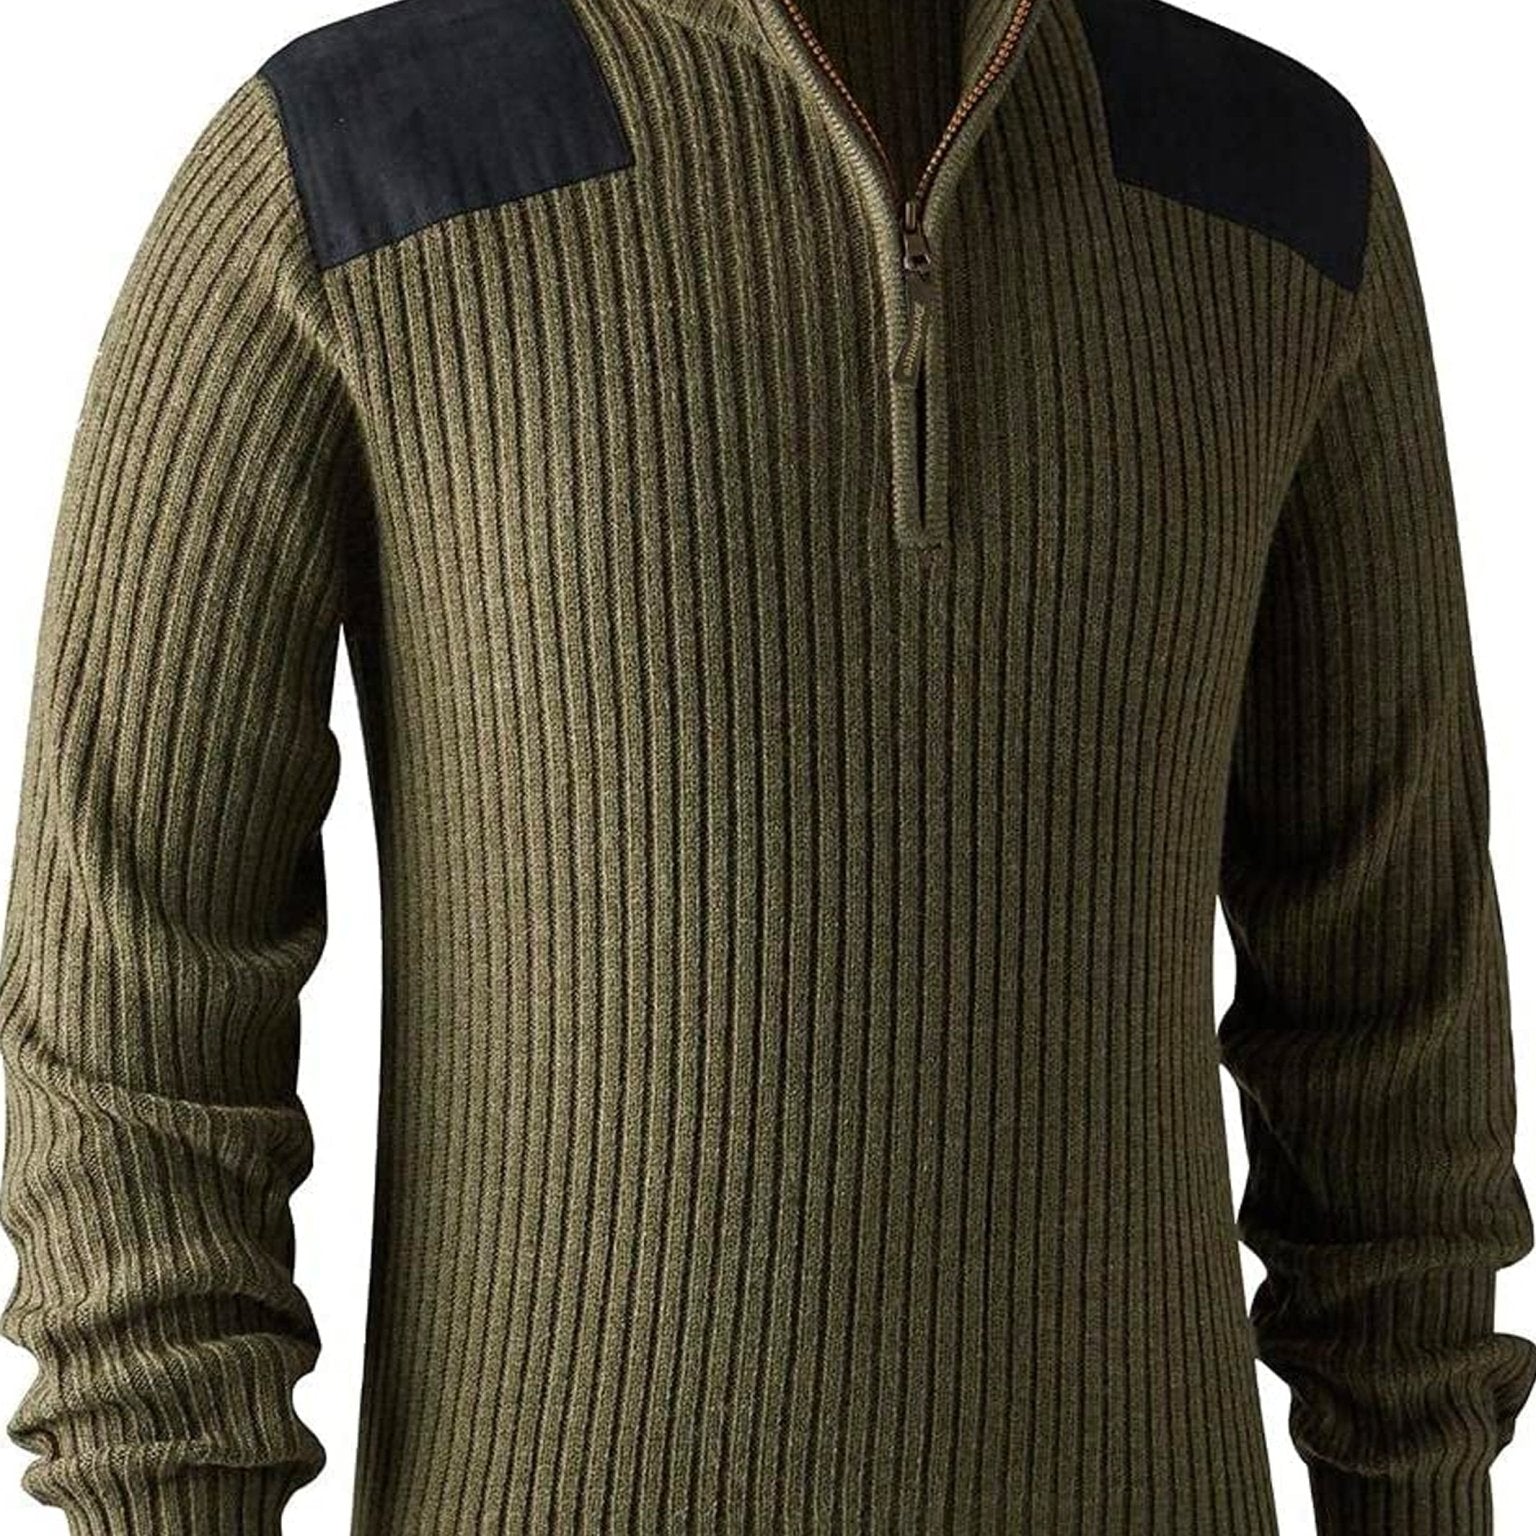 4elementsclothingDeerhunterDeerhunter - Rogaland knit pullover / jumper with quarter ZipKnitwear8726-354-48